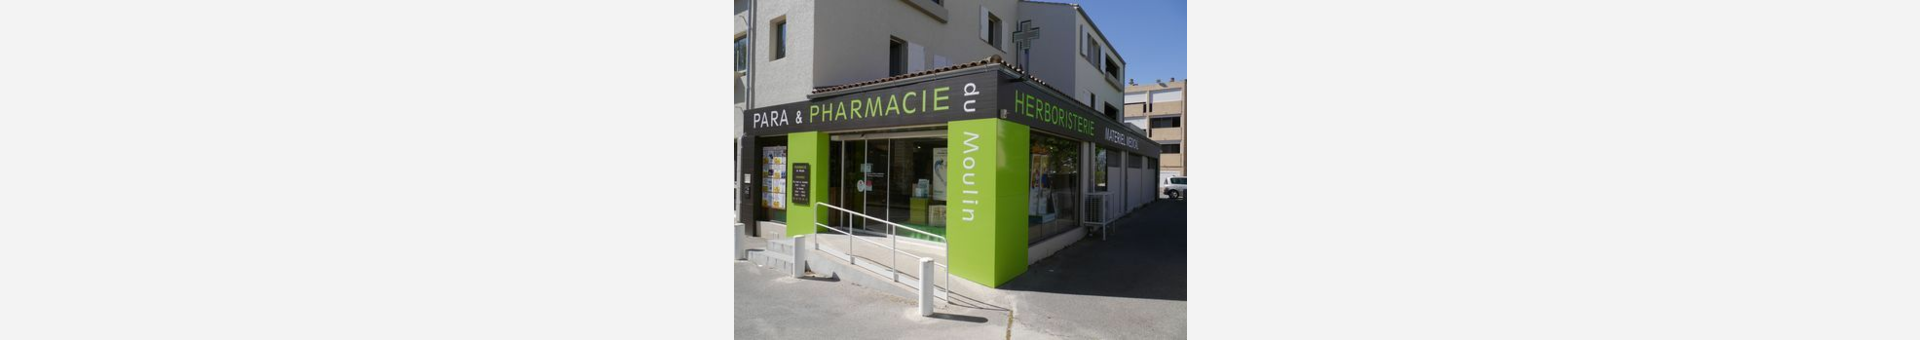 Pharmacie Herboristerie du Moulin,MARIGNANE